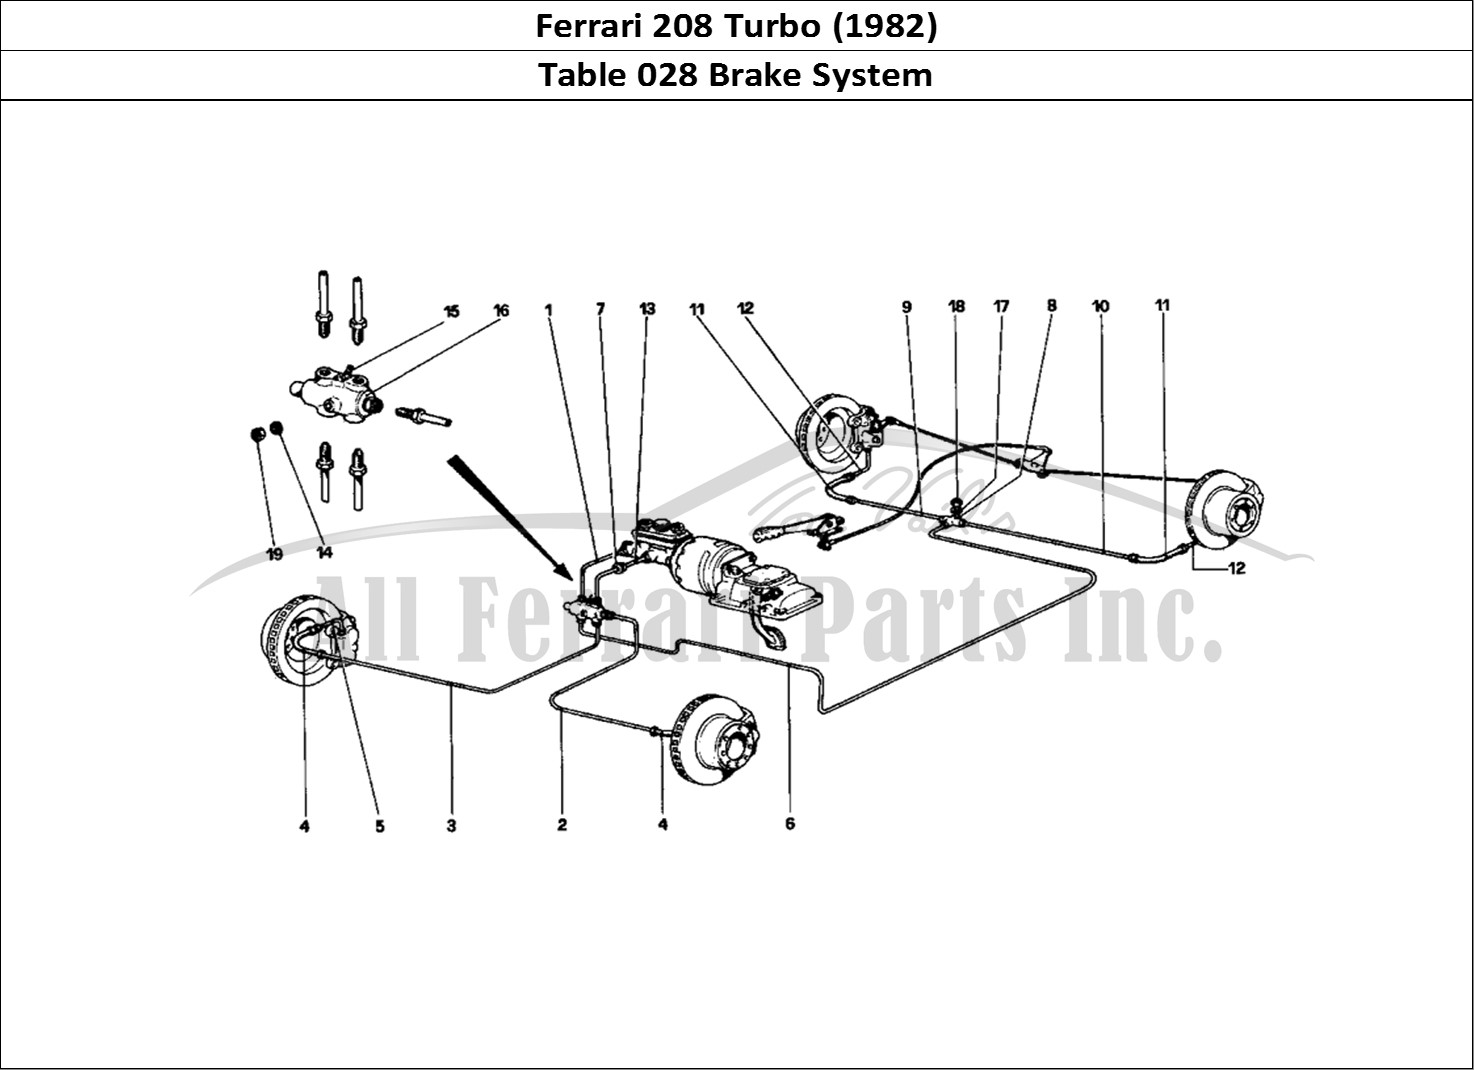 Ferrari Parts Ferrari 208 Turbo (1982) Page 028 Brake System